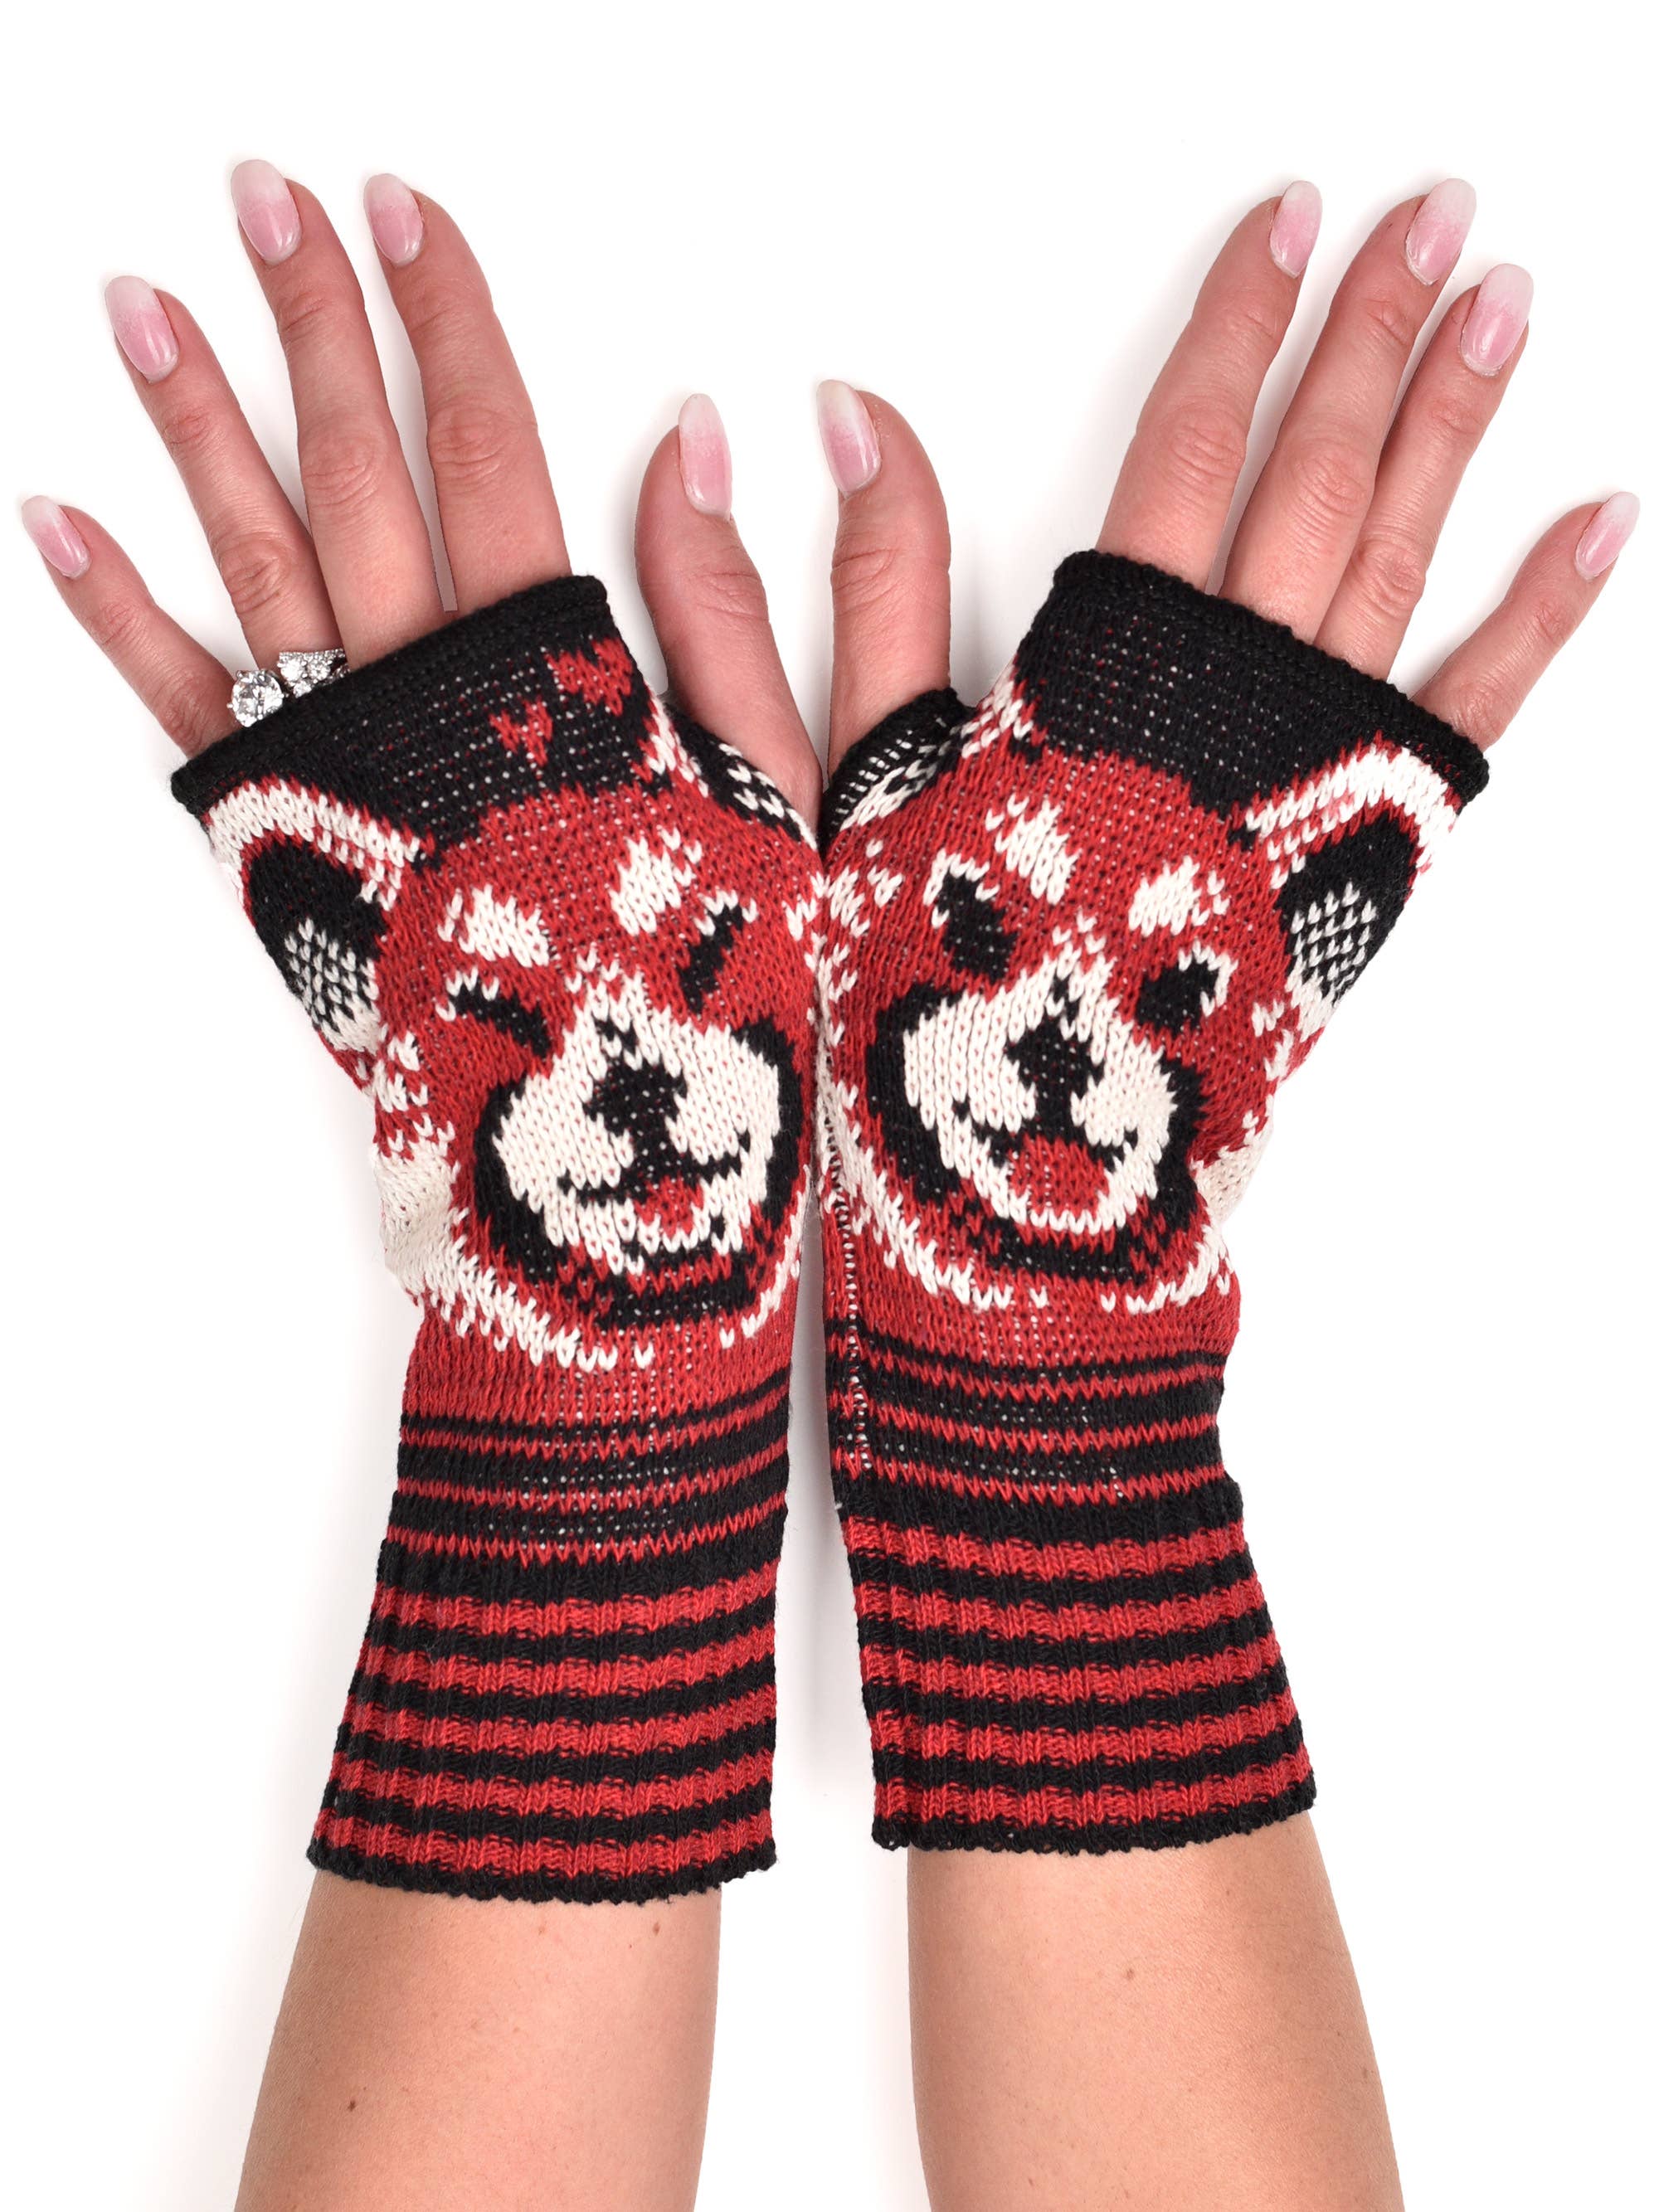 Accessoires Handschoenen & wanten Winterhandschoenen Kasjmier vingerloze handschoenen armwarmers sms-handschoenen handwarmers Lichtgroen 